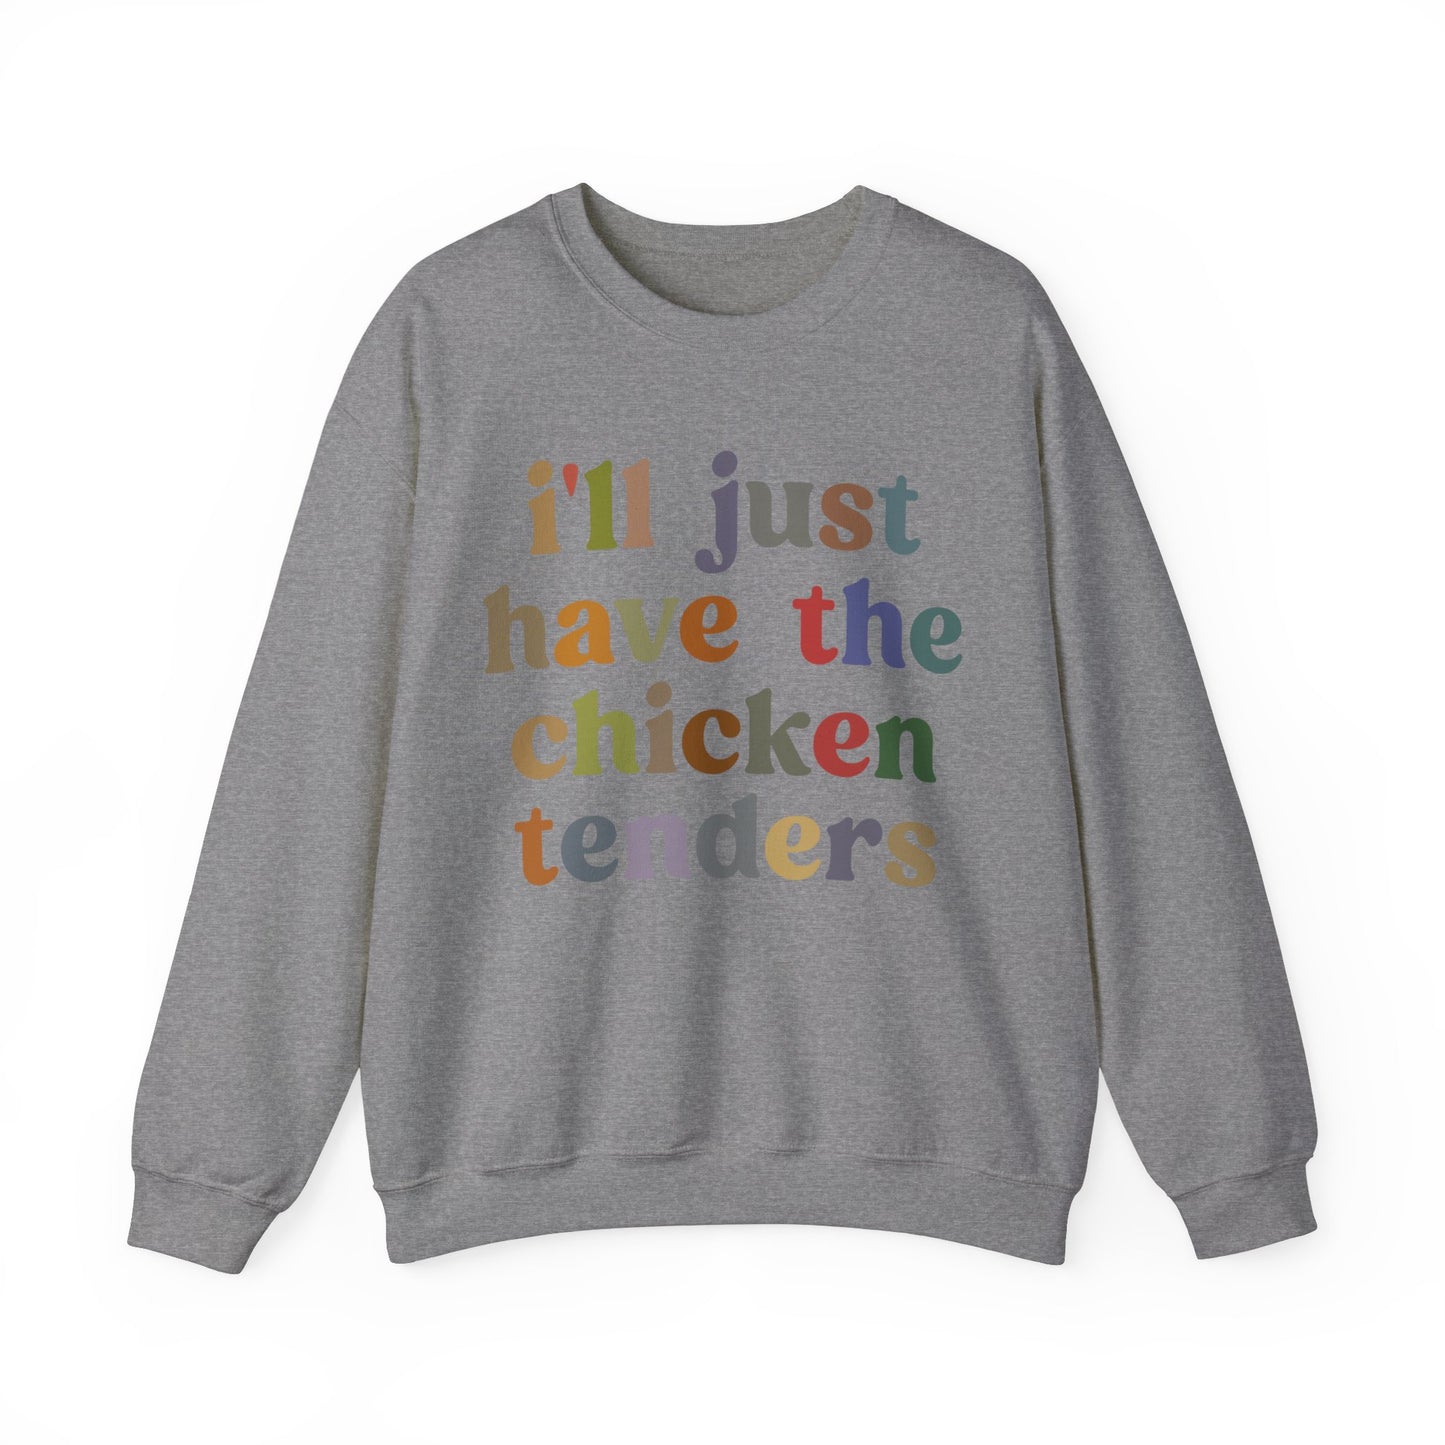 I'll Just Have The Chicken Tenders Sweatshirt, Chicken Nugget Lover Sweatshirt, Funny Sayings Short Sweatshirt, Sarcastic Sweatshirt, S1134